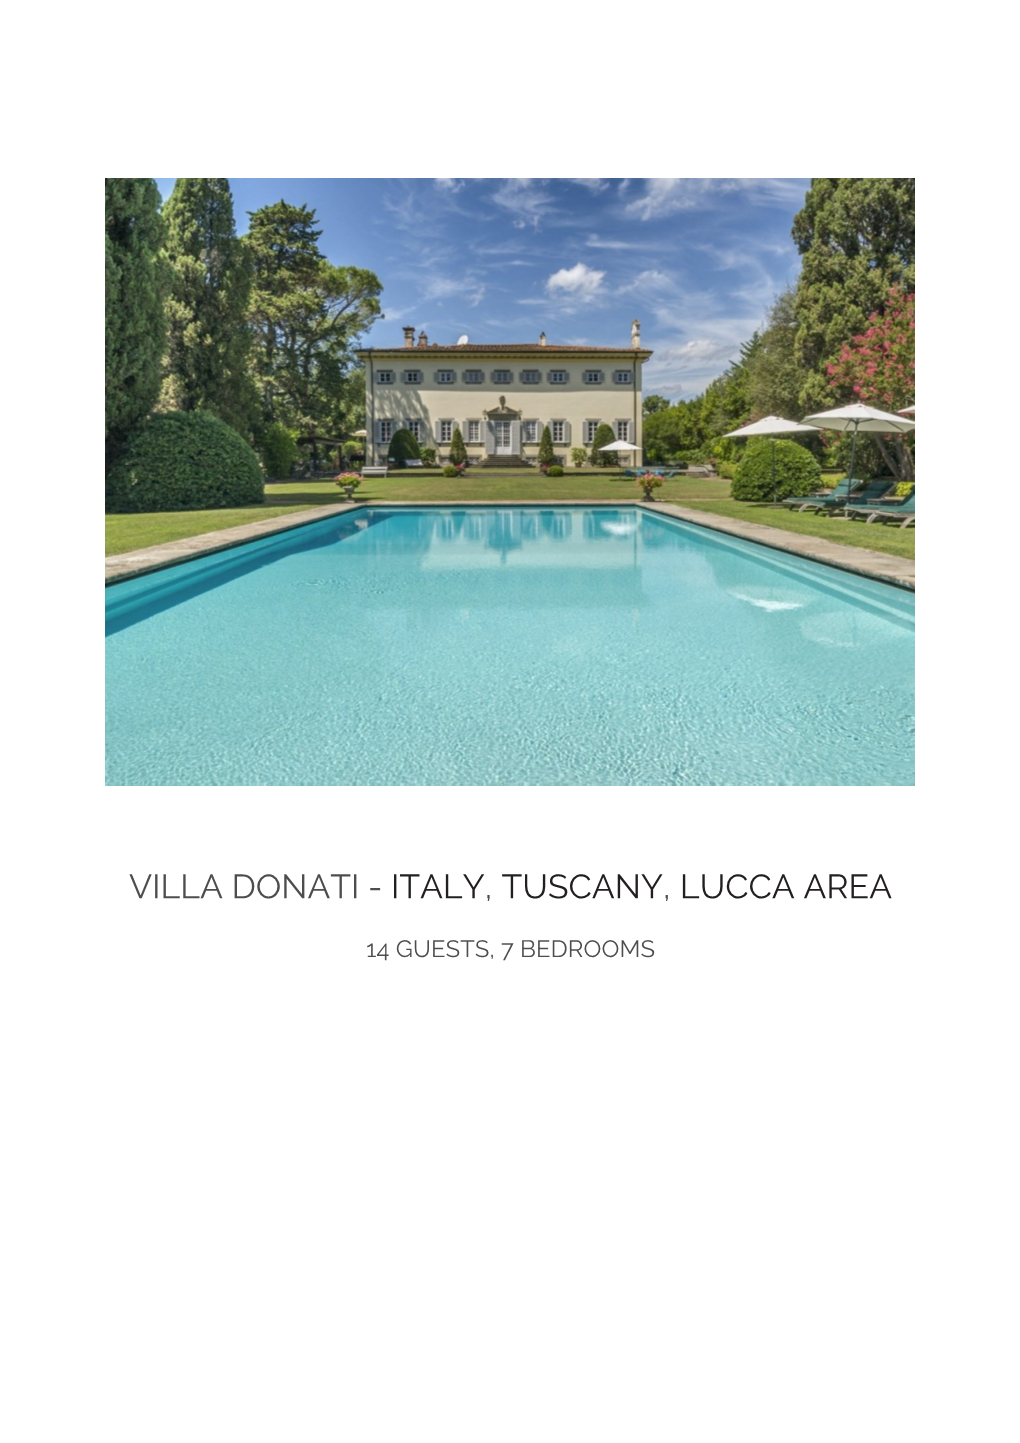 Villa Donati - Italy, Tuscany, Lucca Area